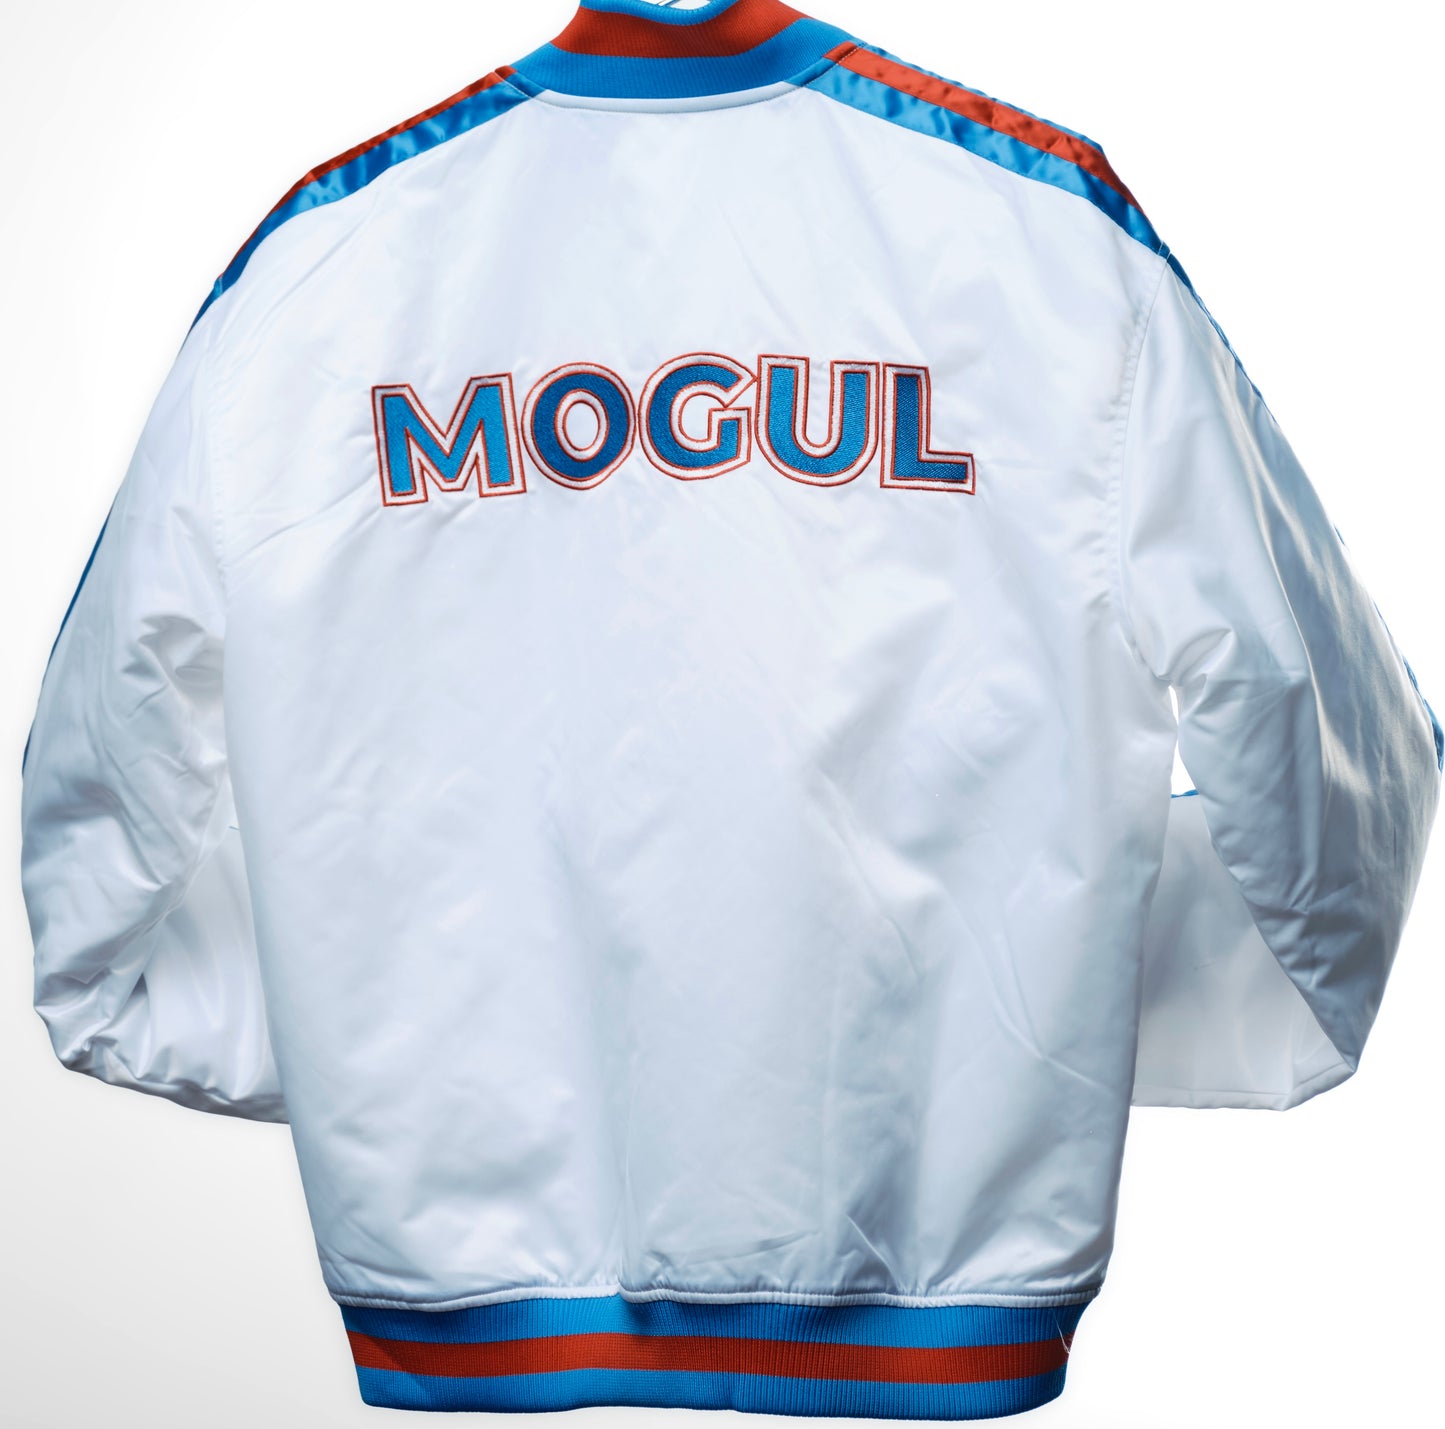 Mogul Brand White Satin Jacket